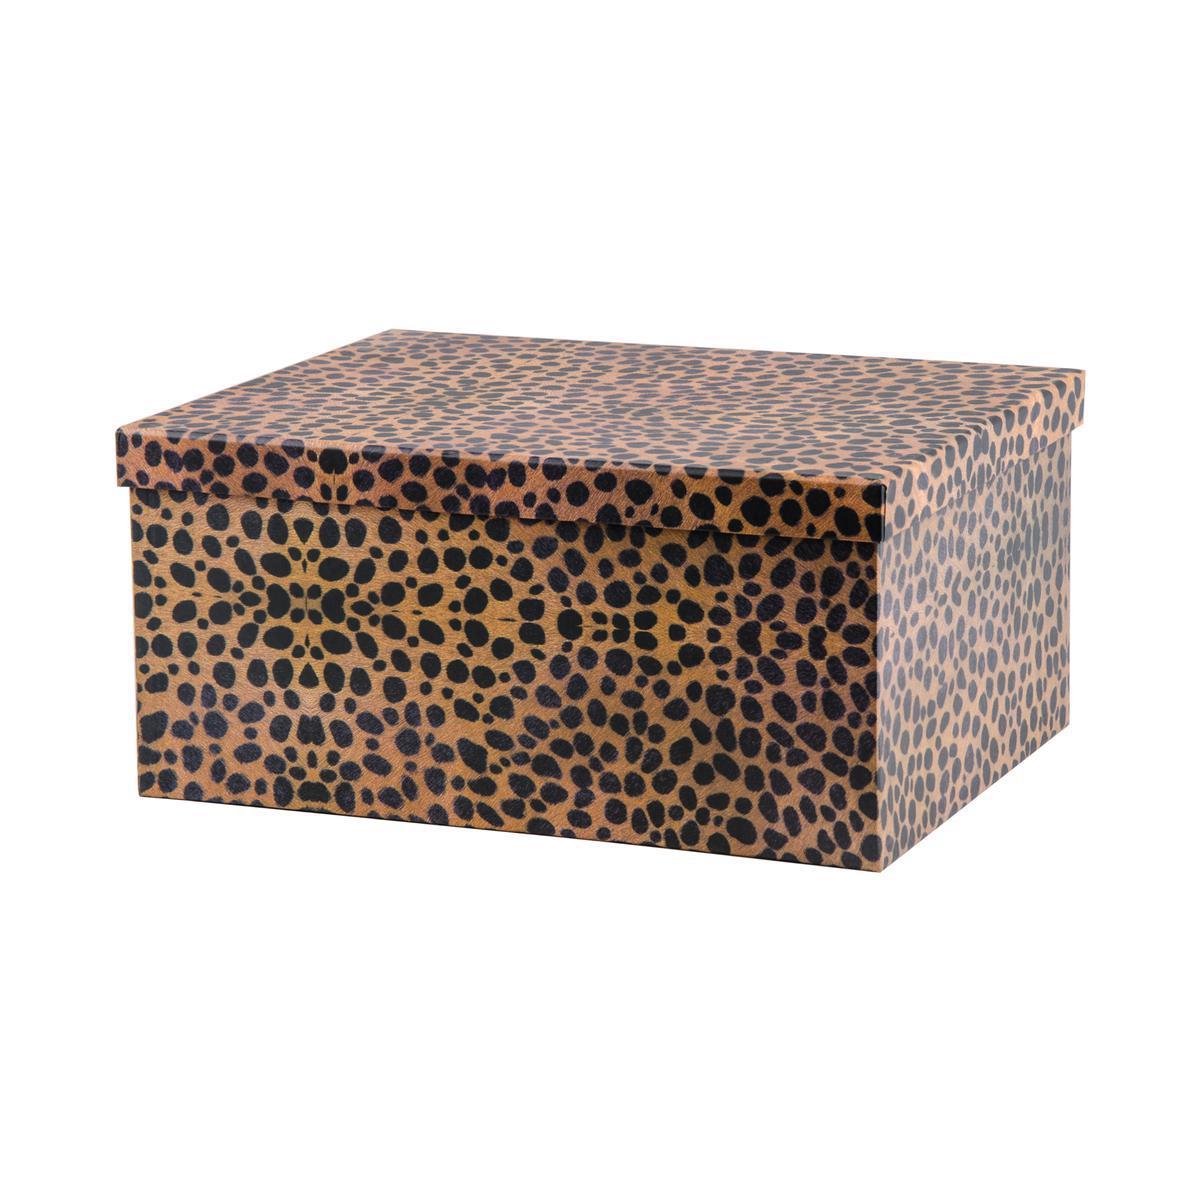 Boite tigré en carton - 33 x 25,5 x 15,5 cm - Noir et marron